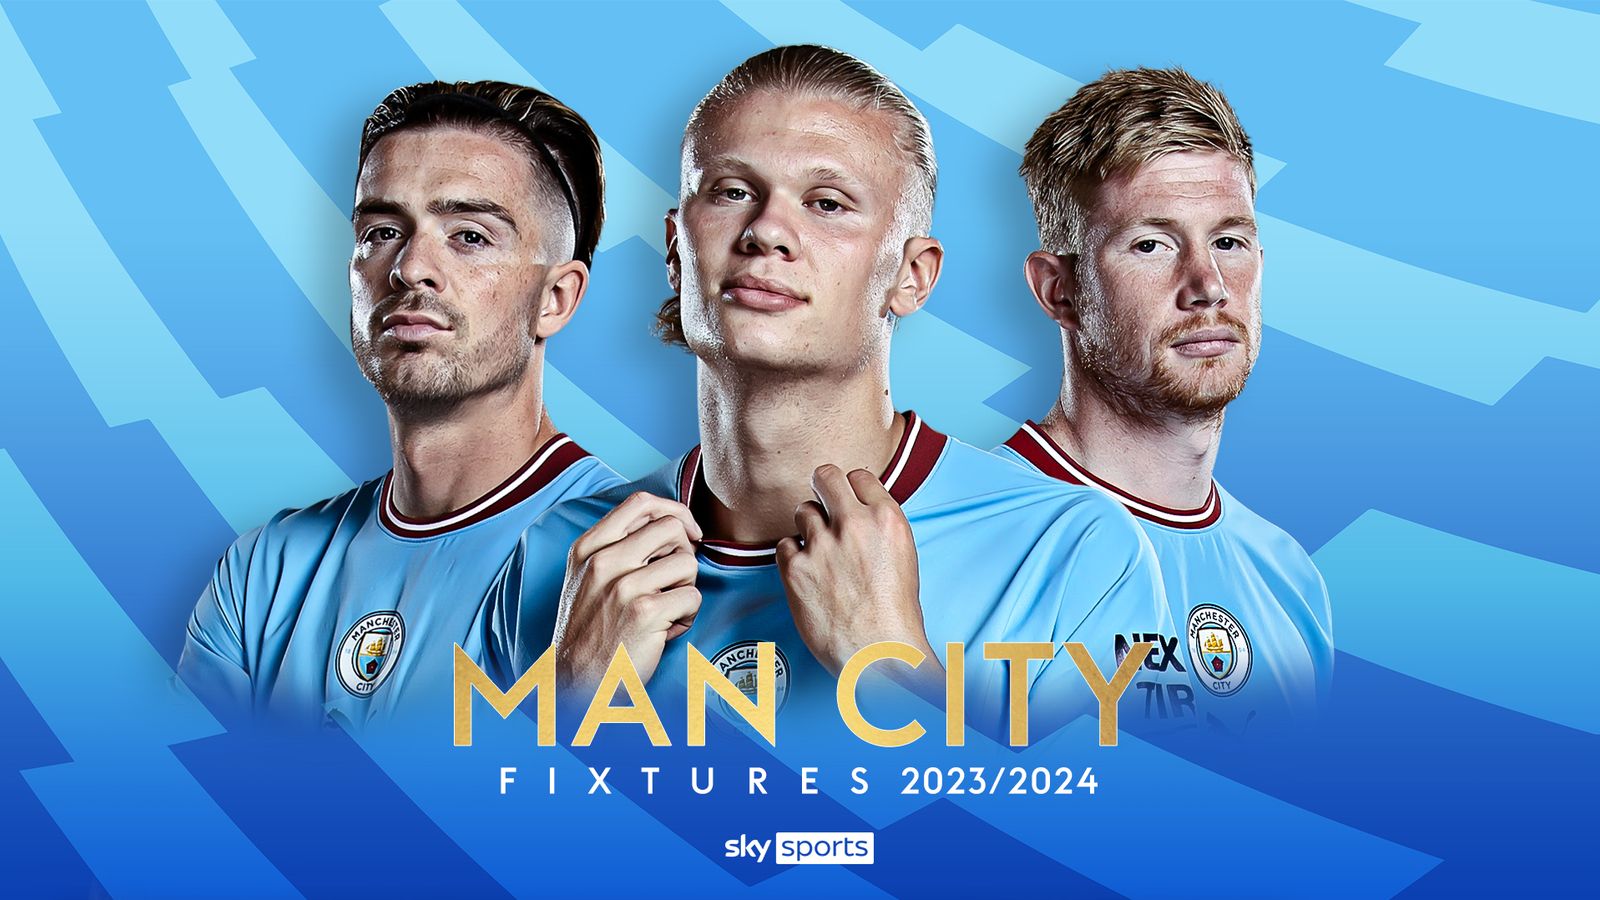 Premier League 2023/24 fixtures, dates, schedule: Champions Manchester City  kick off new season at Burnley, Football News